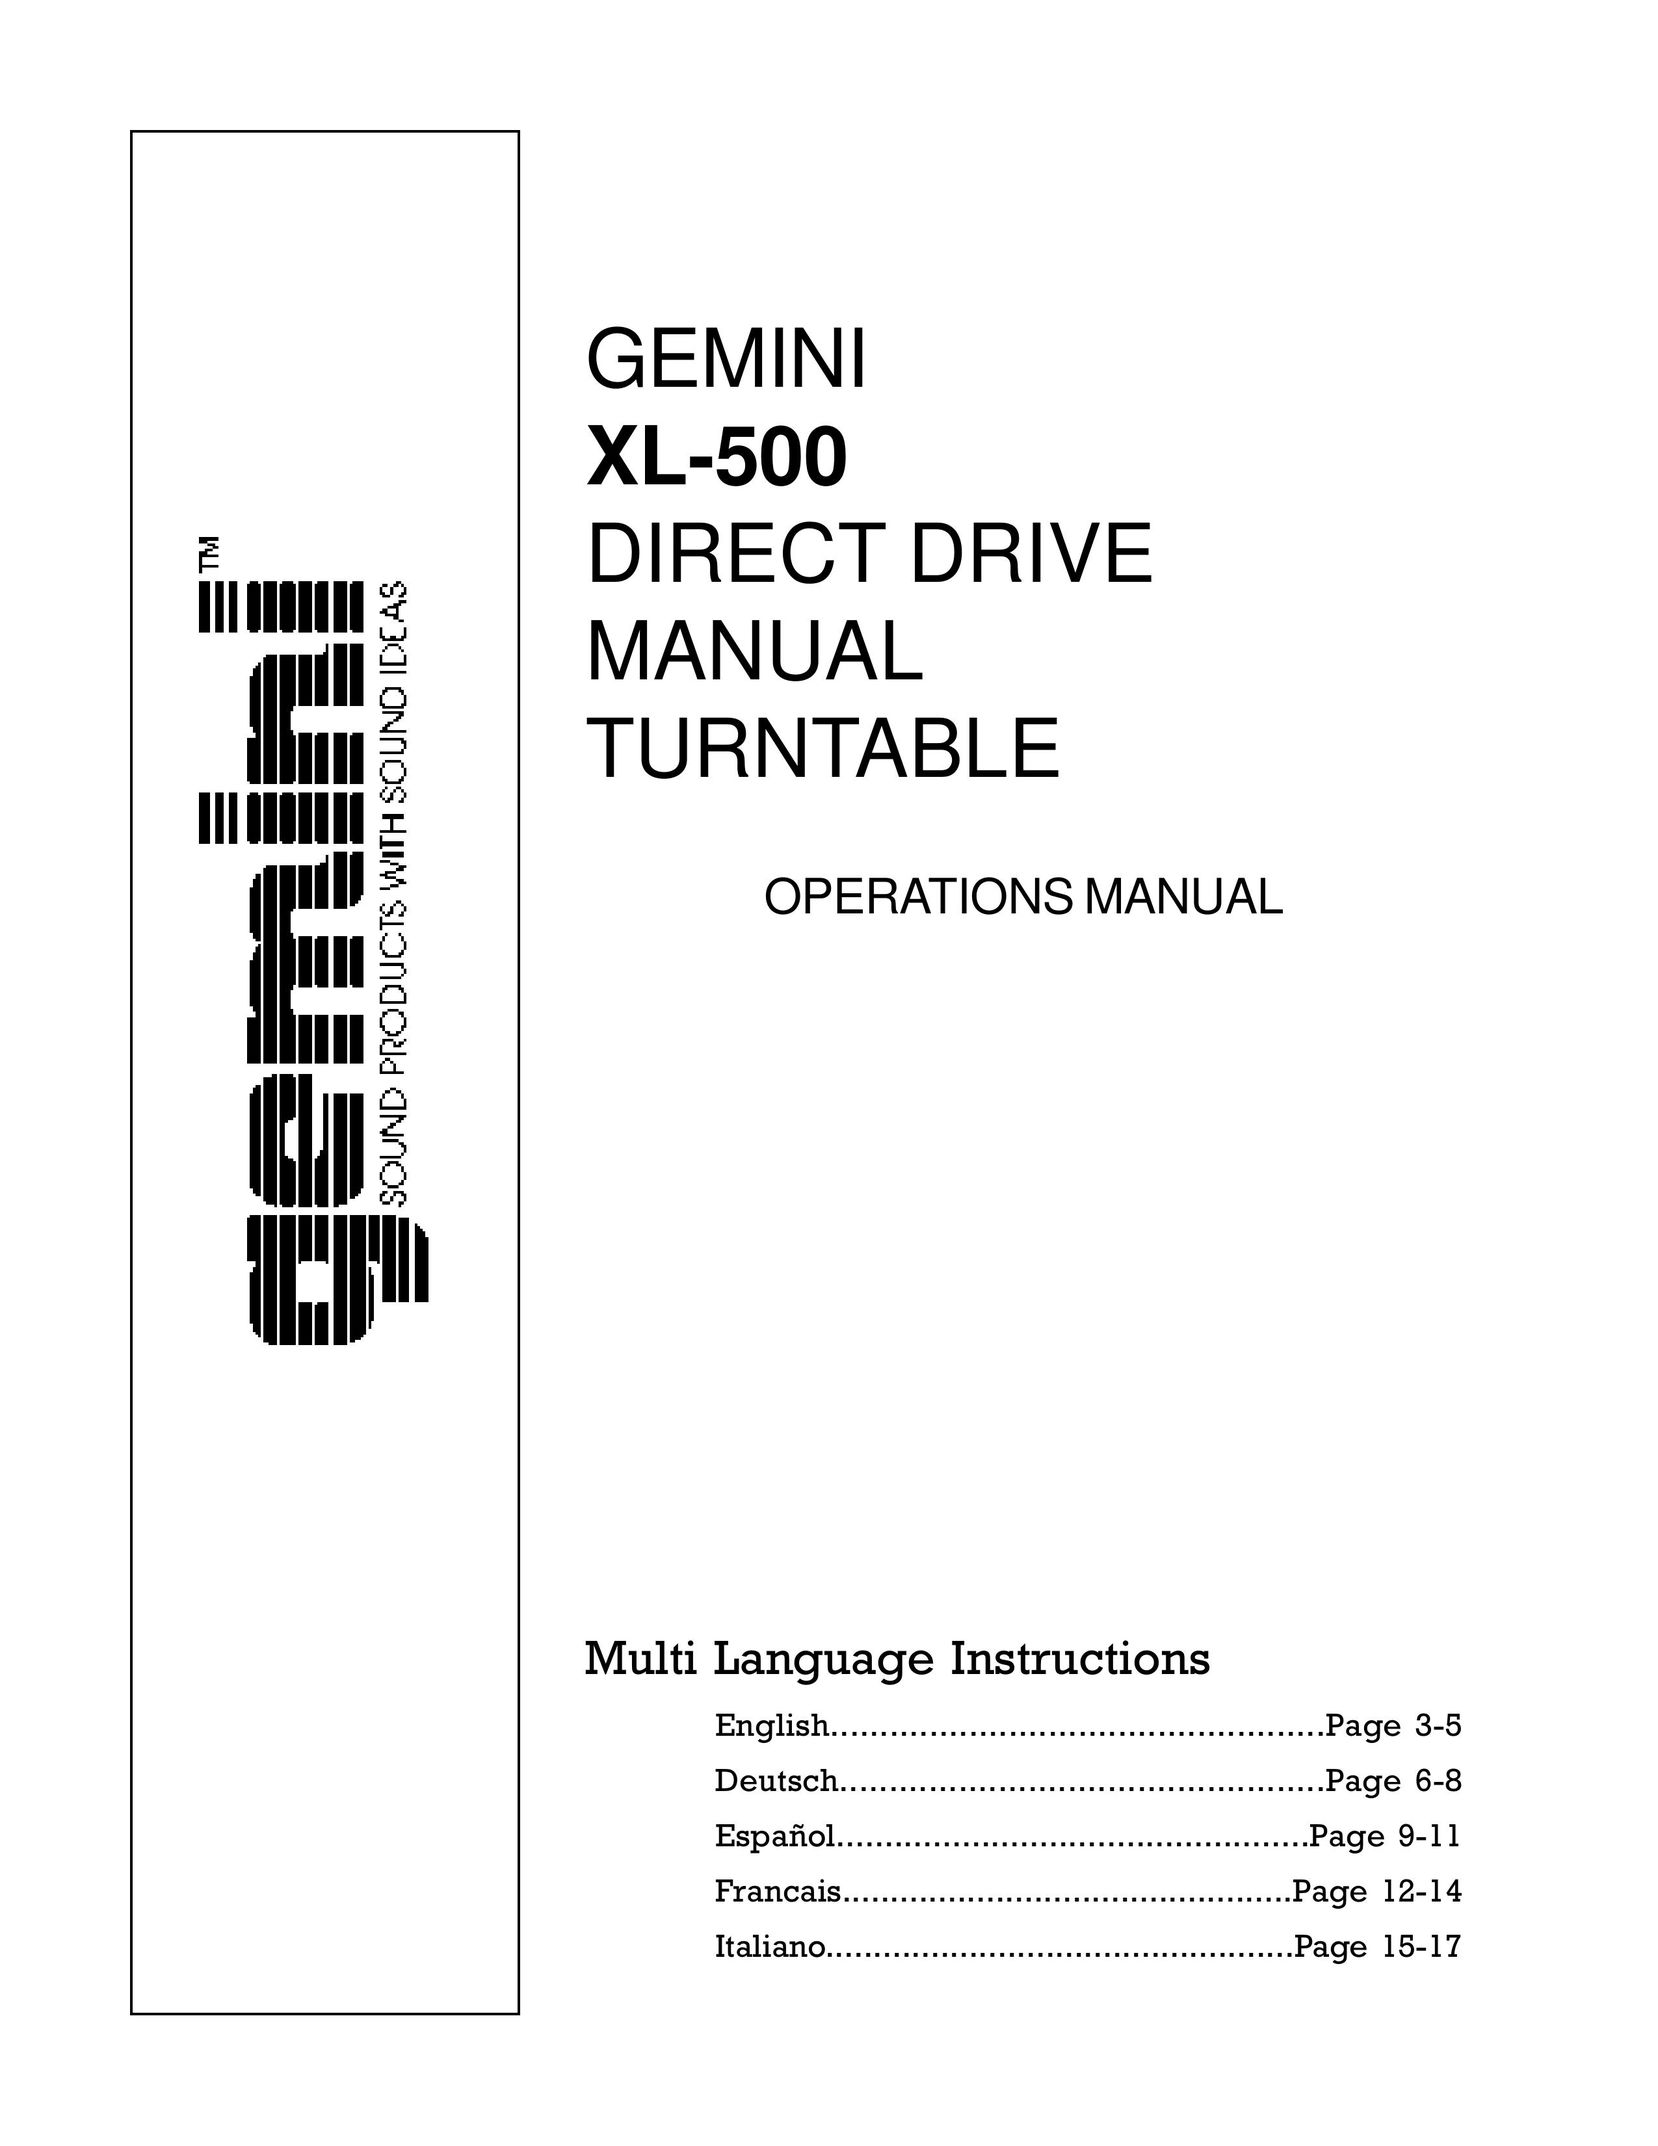 Gemini XL-500 Turntable User Manual